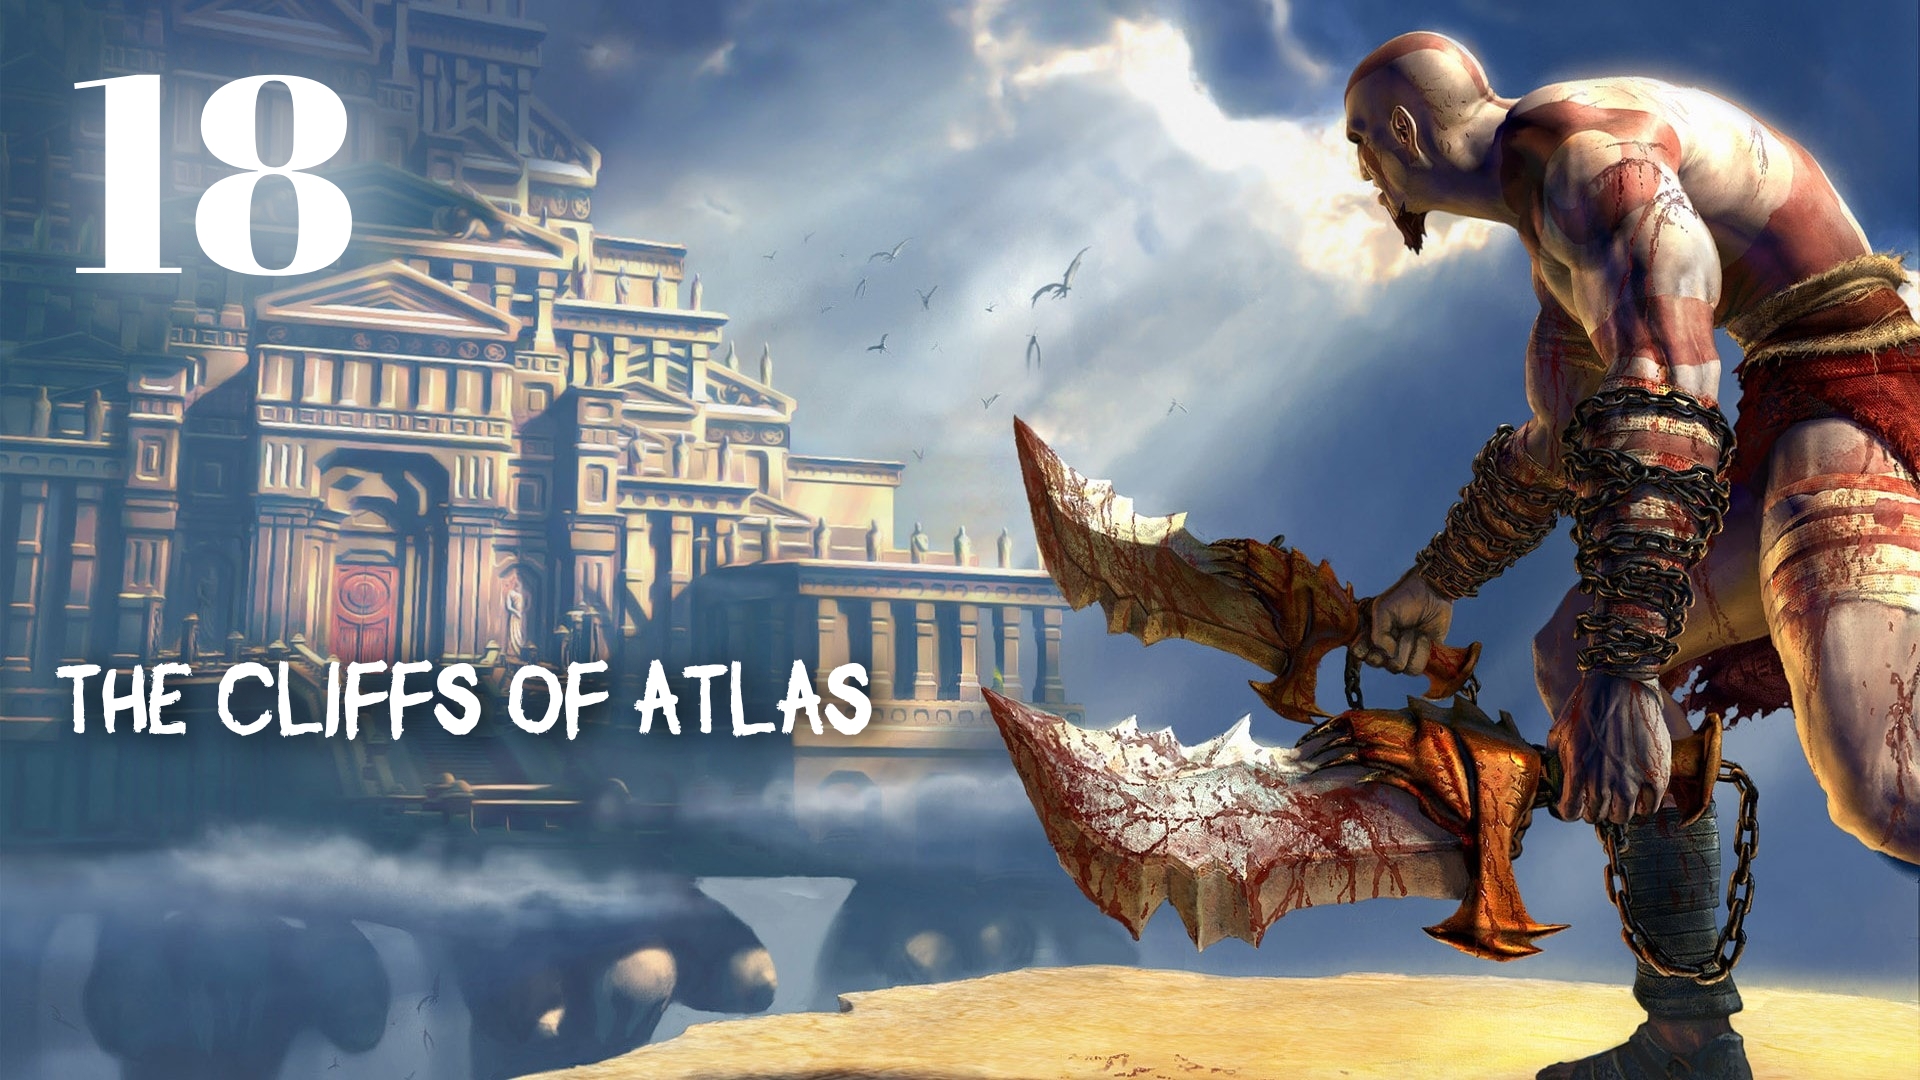 God of War HD The Challenge of Atlas: The Cliffs of Atlas